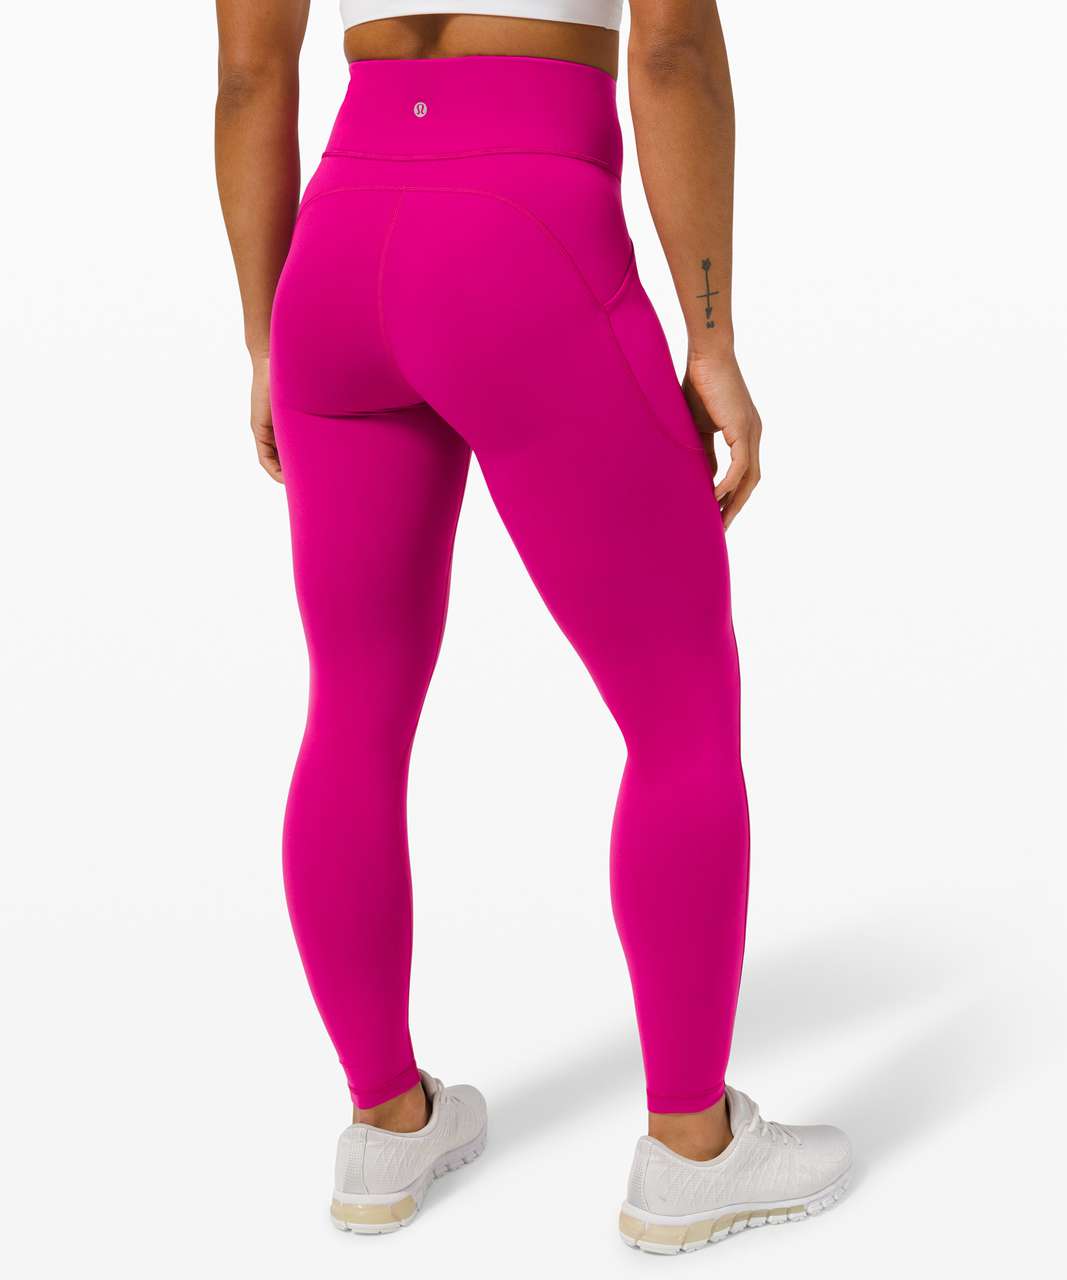 NWT Lululemon Invigorate High-Rise Tight 25 Pink Raspberry Size 18 Retail  $128 